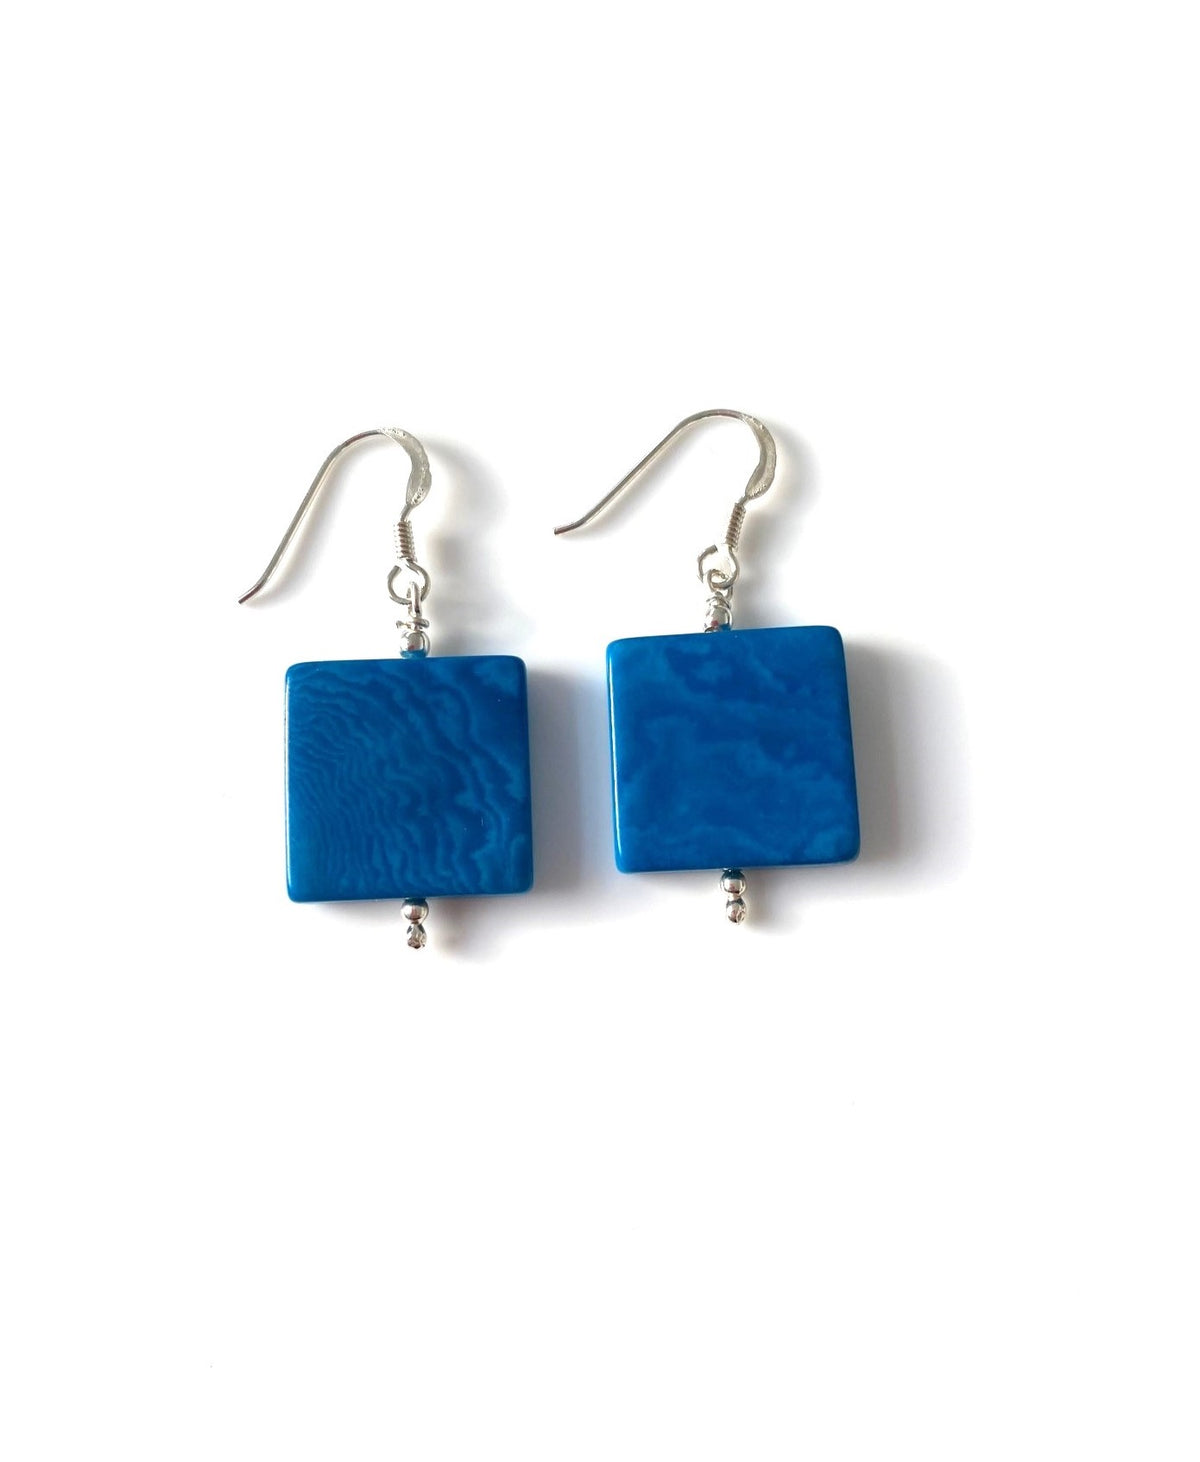 Cuadros earrings (18mm) - Turquoise